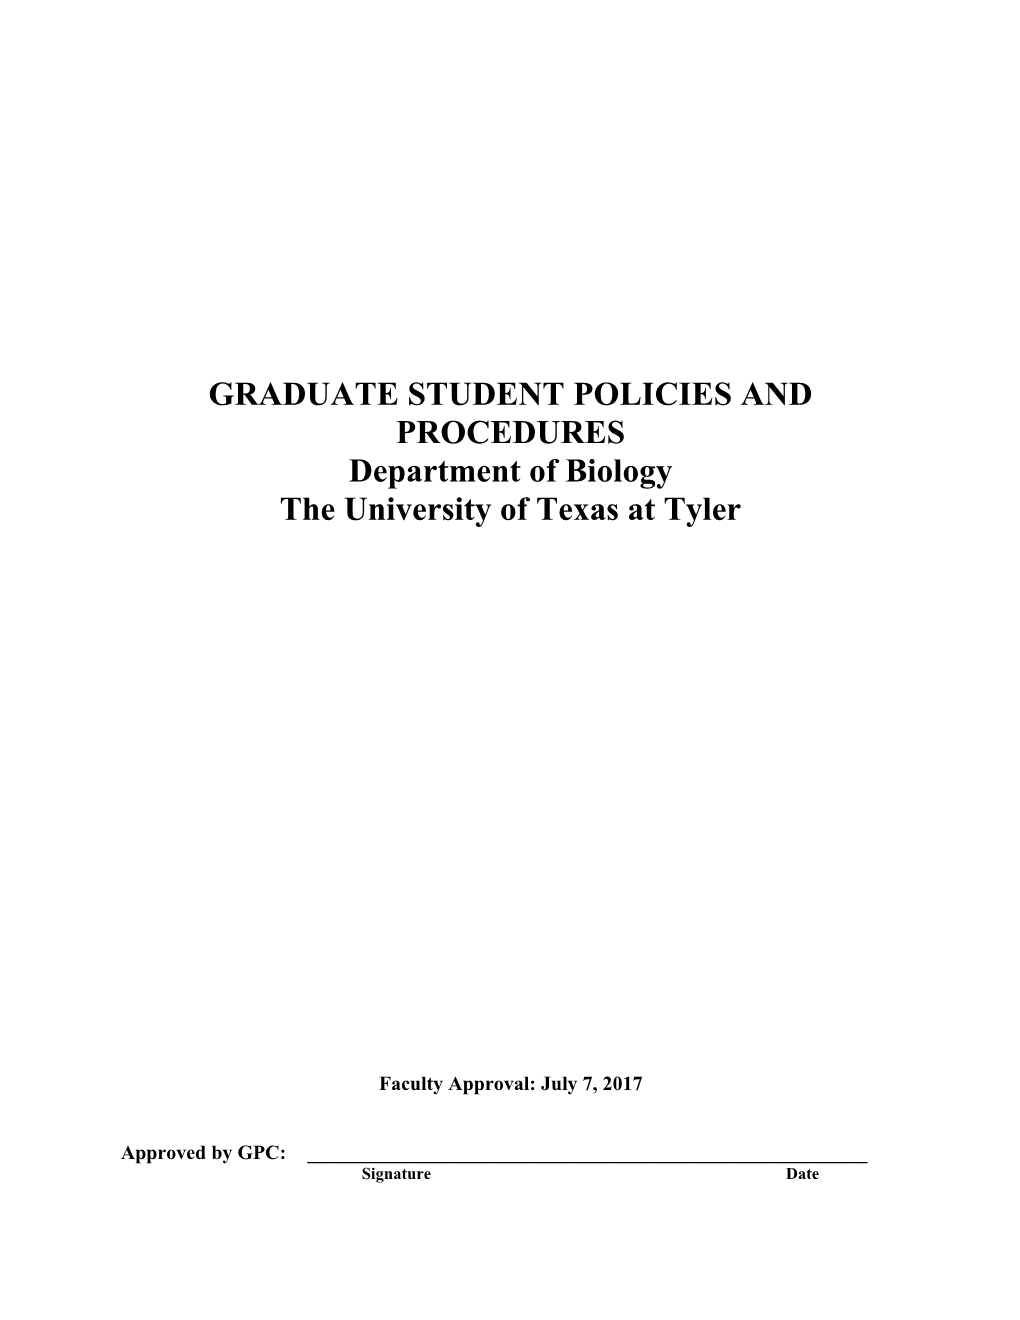 Graduate Student Policies and Procedures